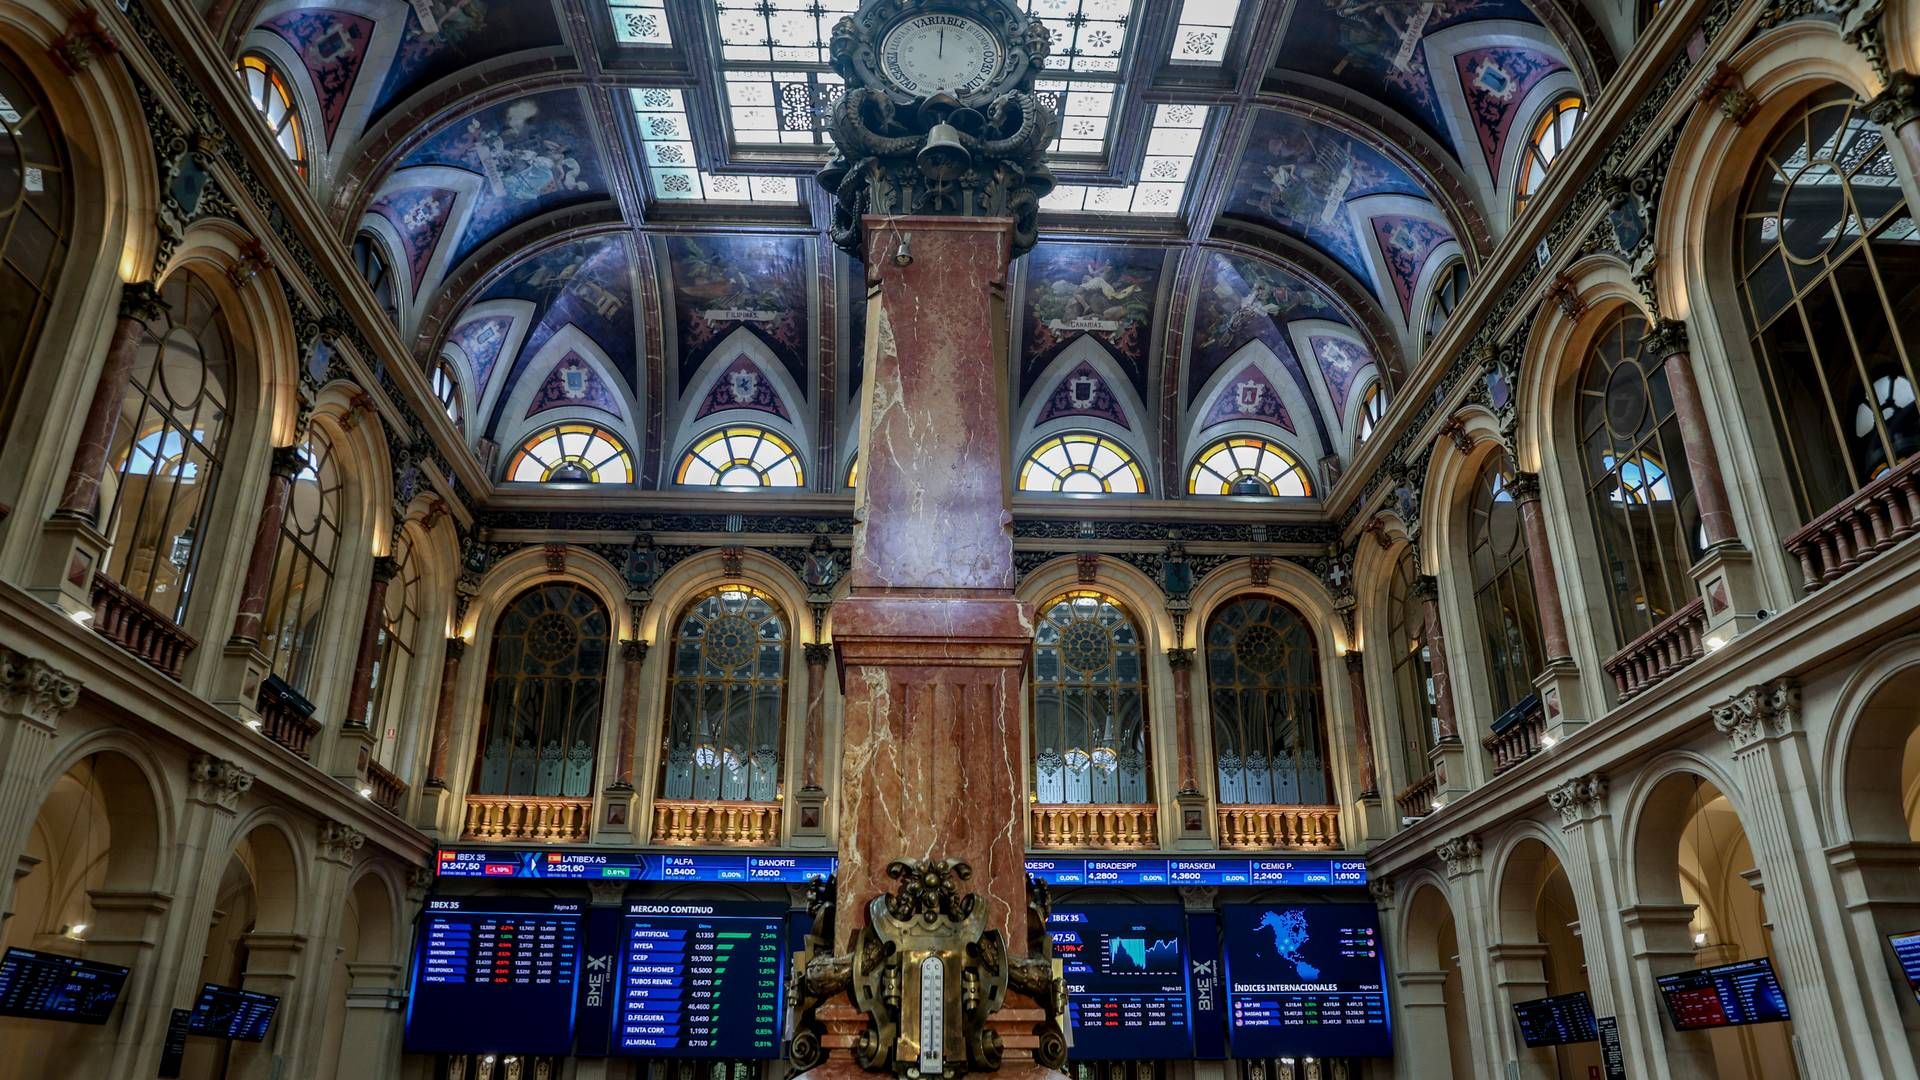 Panels show stock market indexes inside the Palacio de la Bolsa in Madrid, Spain. | Photo: Ricardo Rubio/AP/Ritzau Scanpix